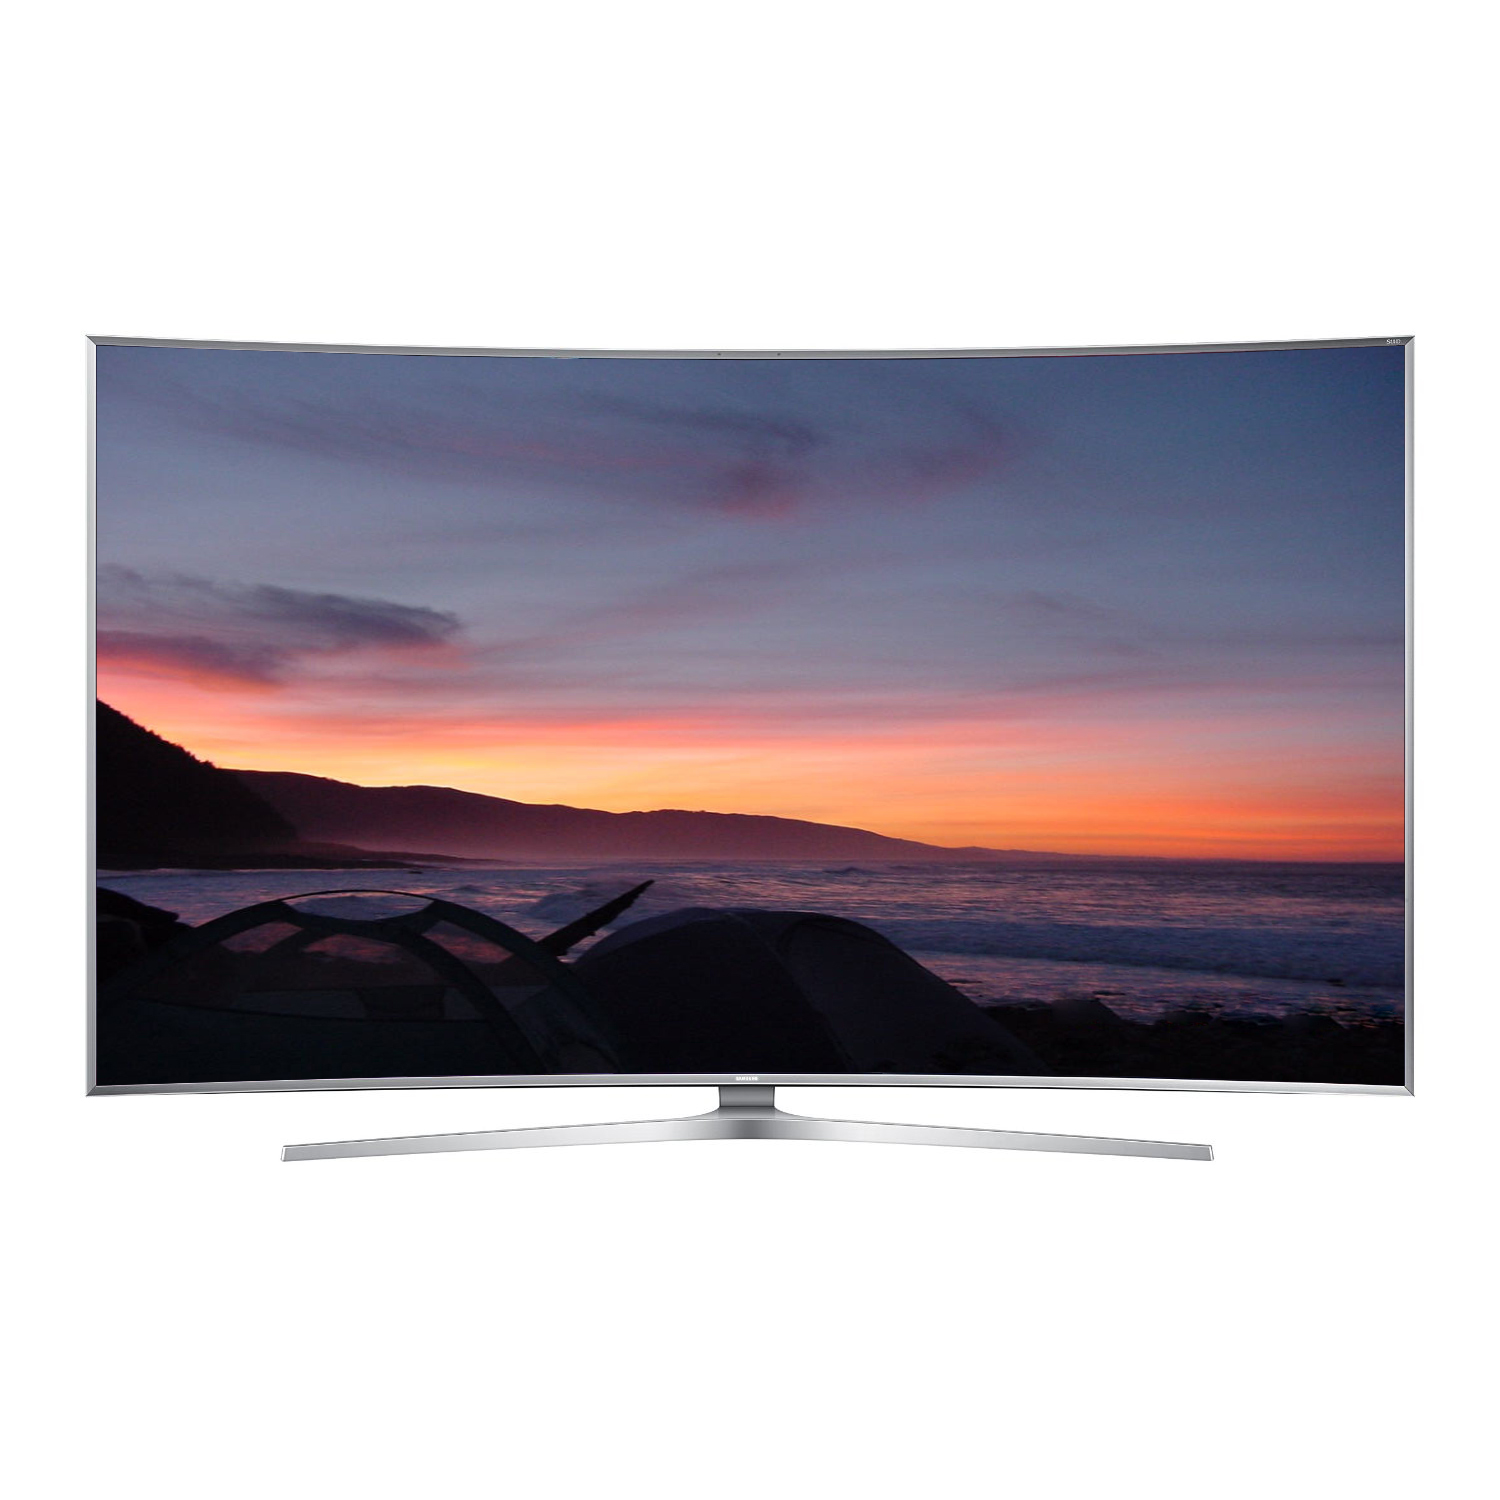 Samsung Refurbished 65" Class 4K Ultra HD Curved LED Smart SUHD TV - UN65JS9000